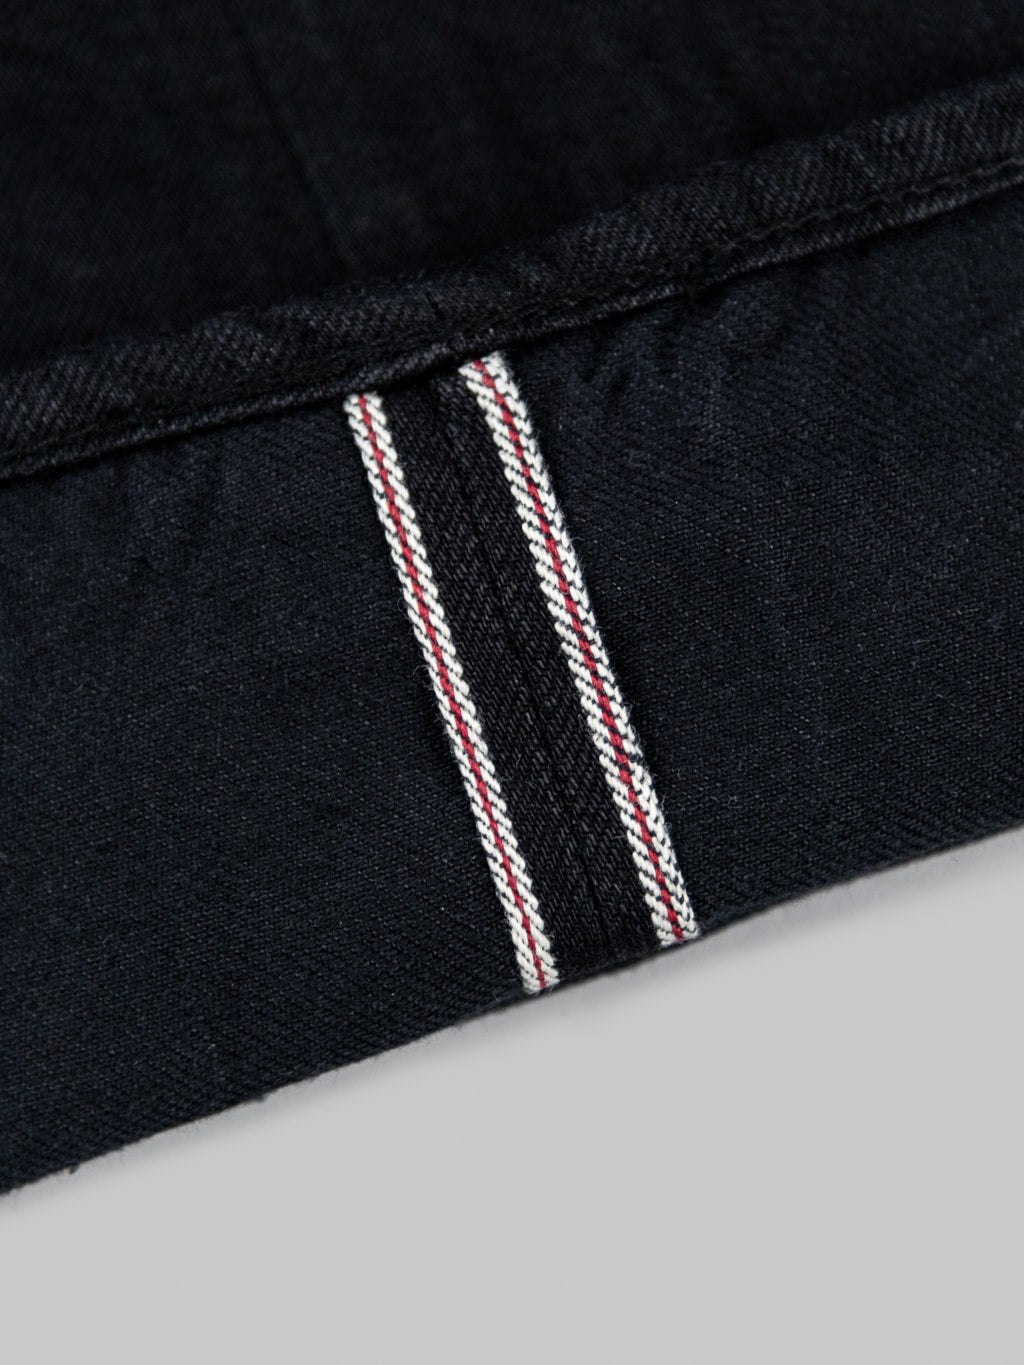 Sugar Cane Type III 13oz Black Denim Slim Jeans selvedge closeup